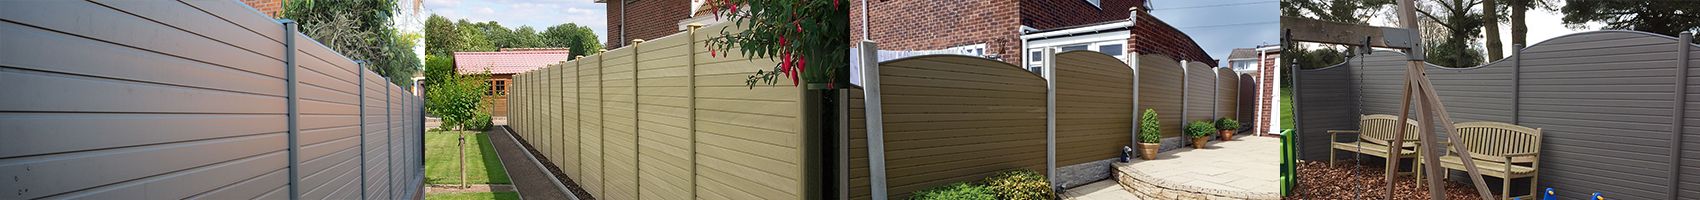 110mm x 90mm PVC Composite Fence Post Cap Walnut